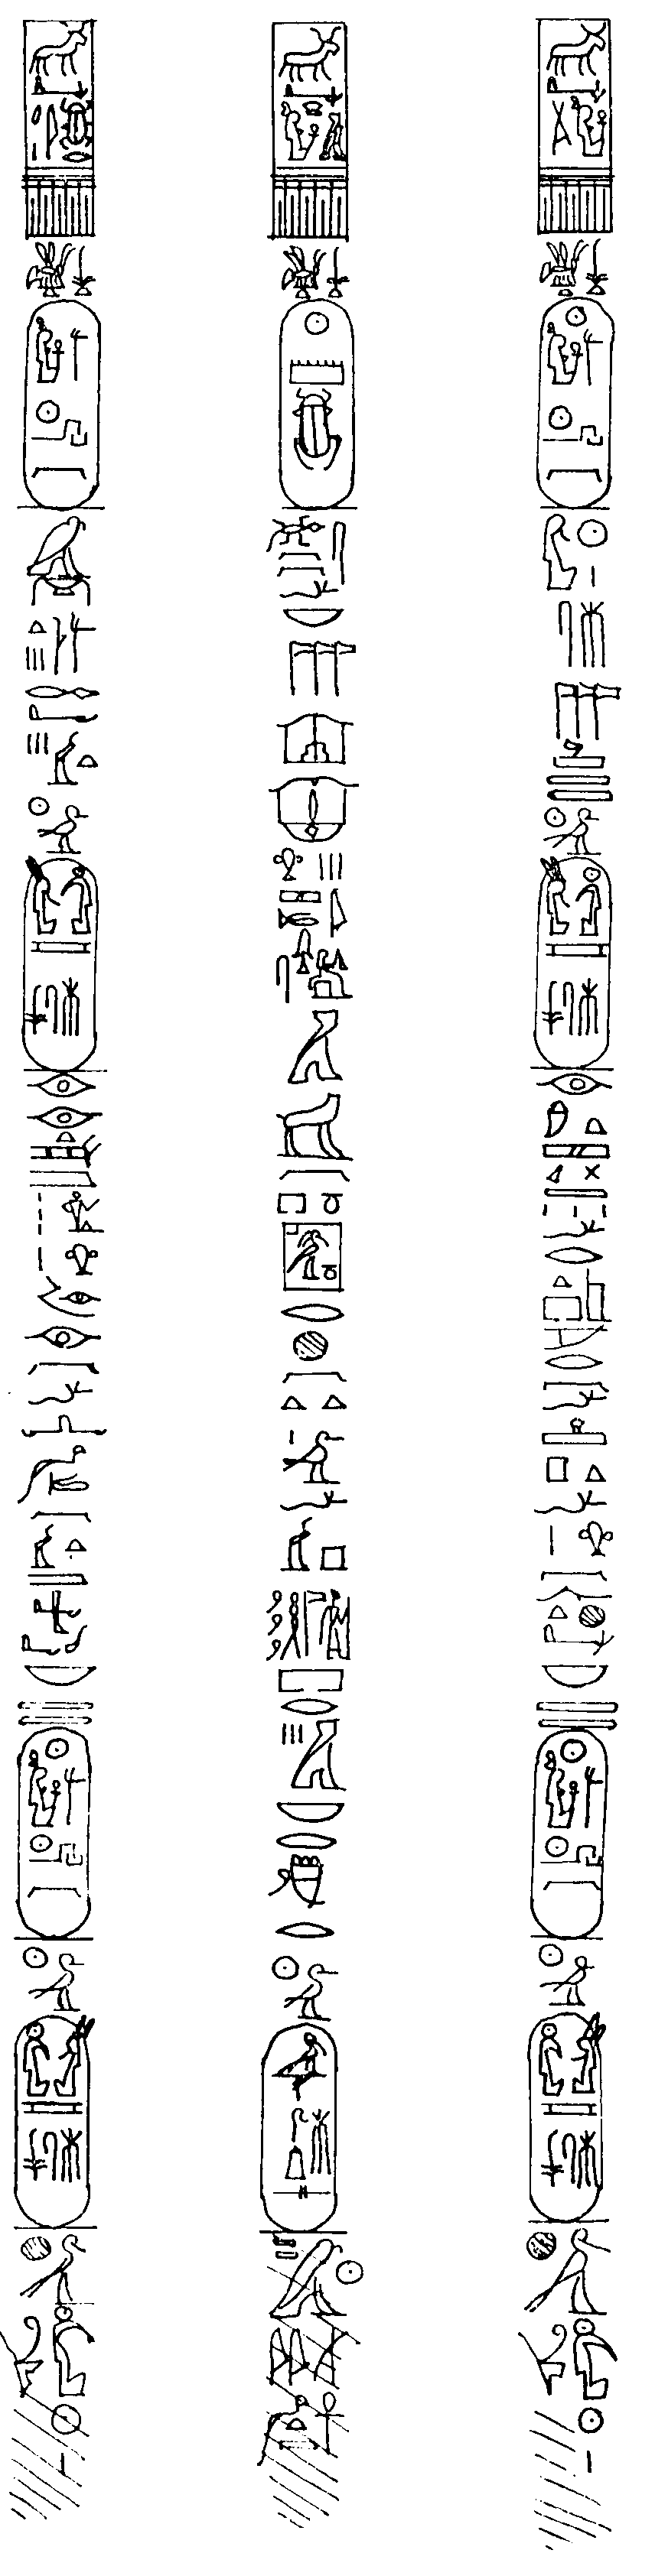 Hieroglyphics at South Face